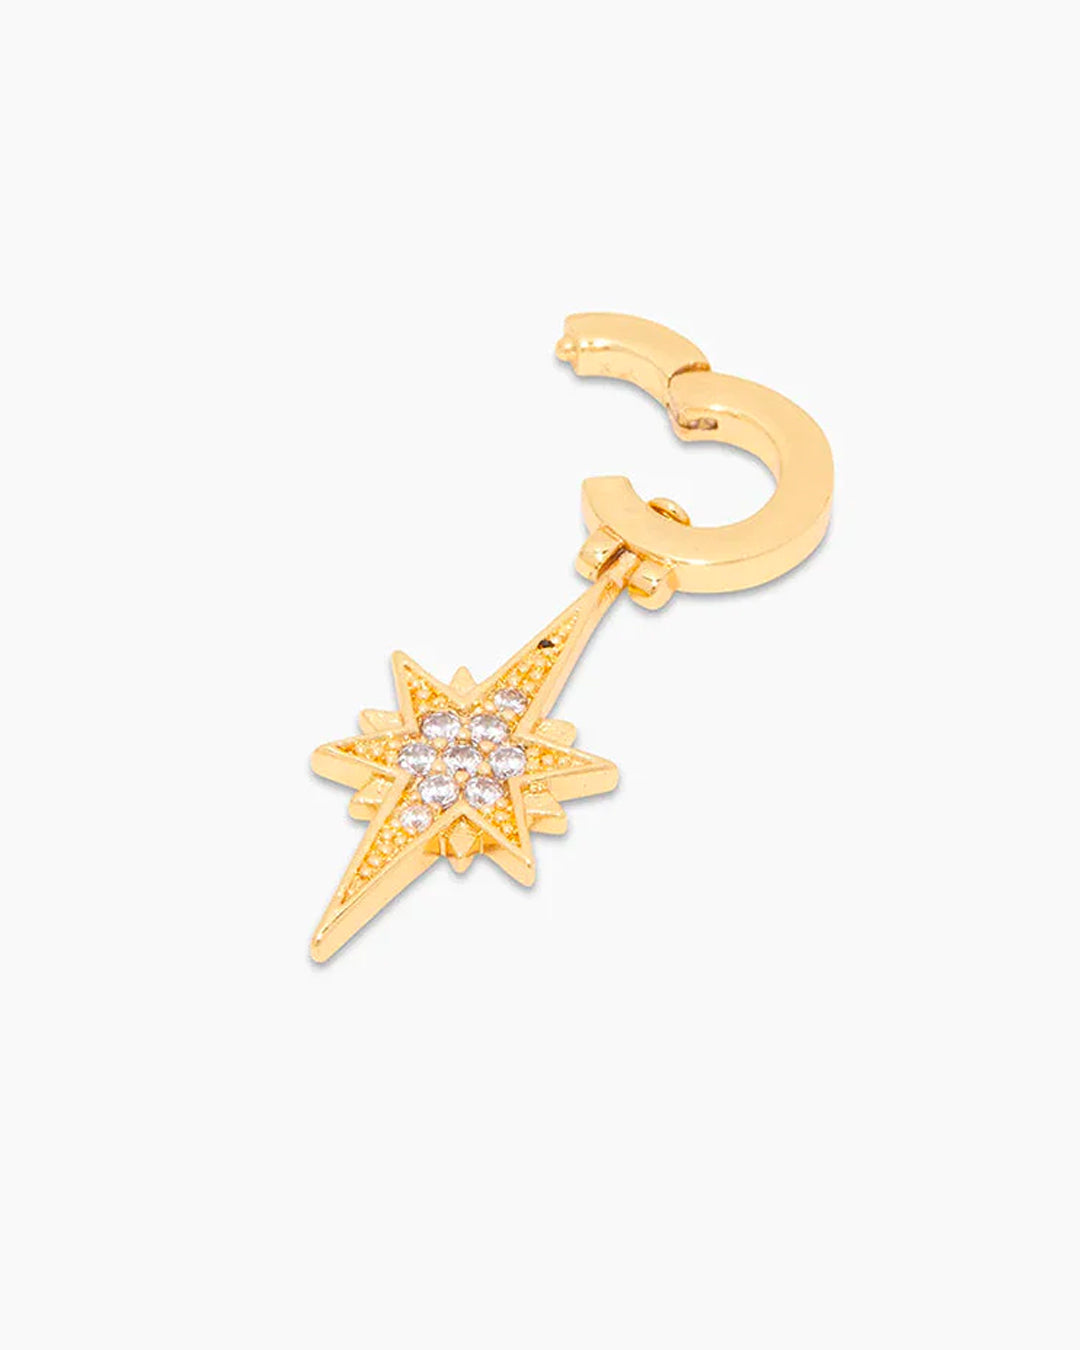  CelestialParker Charm  Star charm Parker charm || option::Gold Plated, Celestial